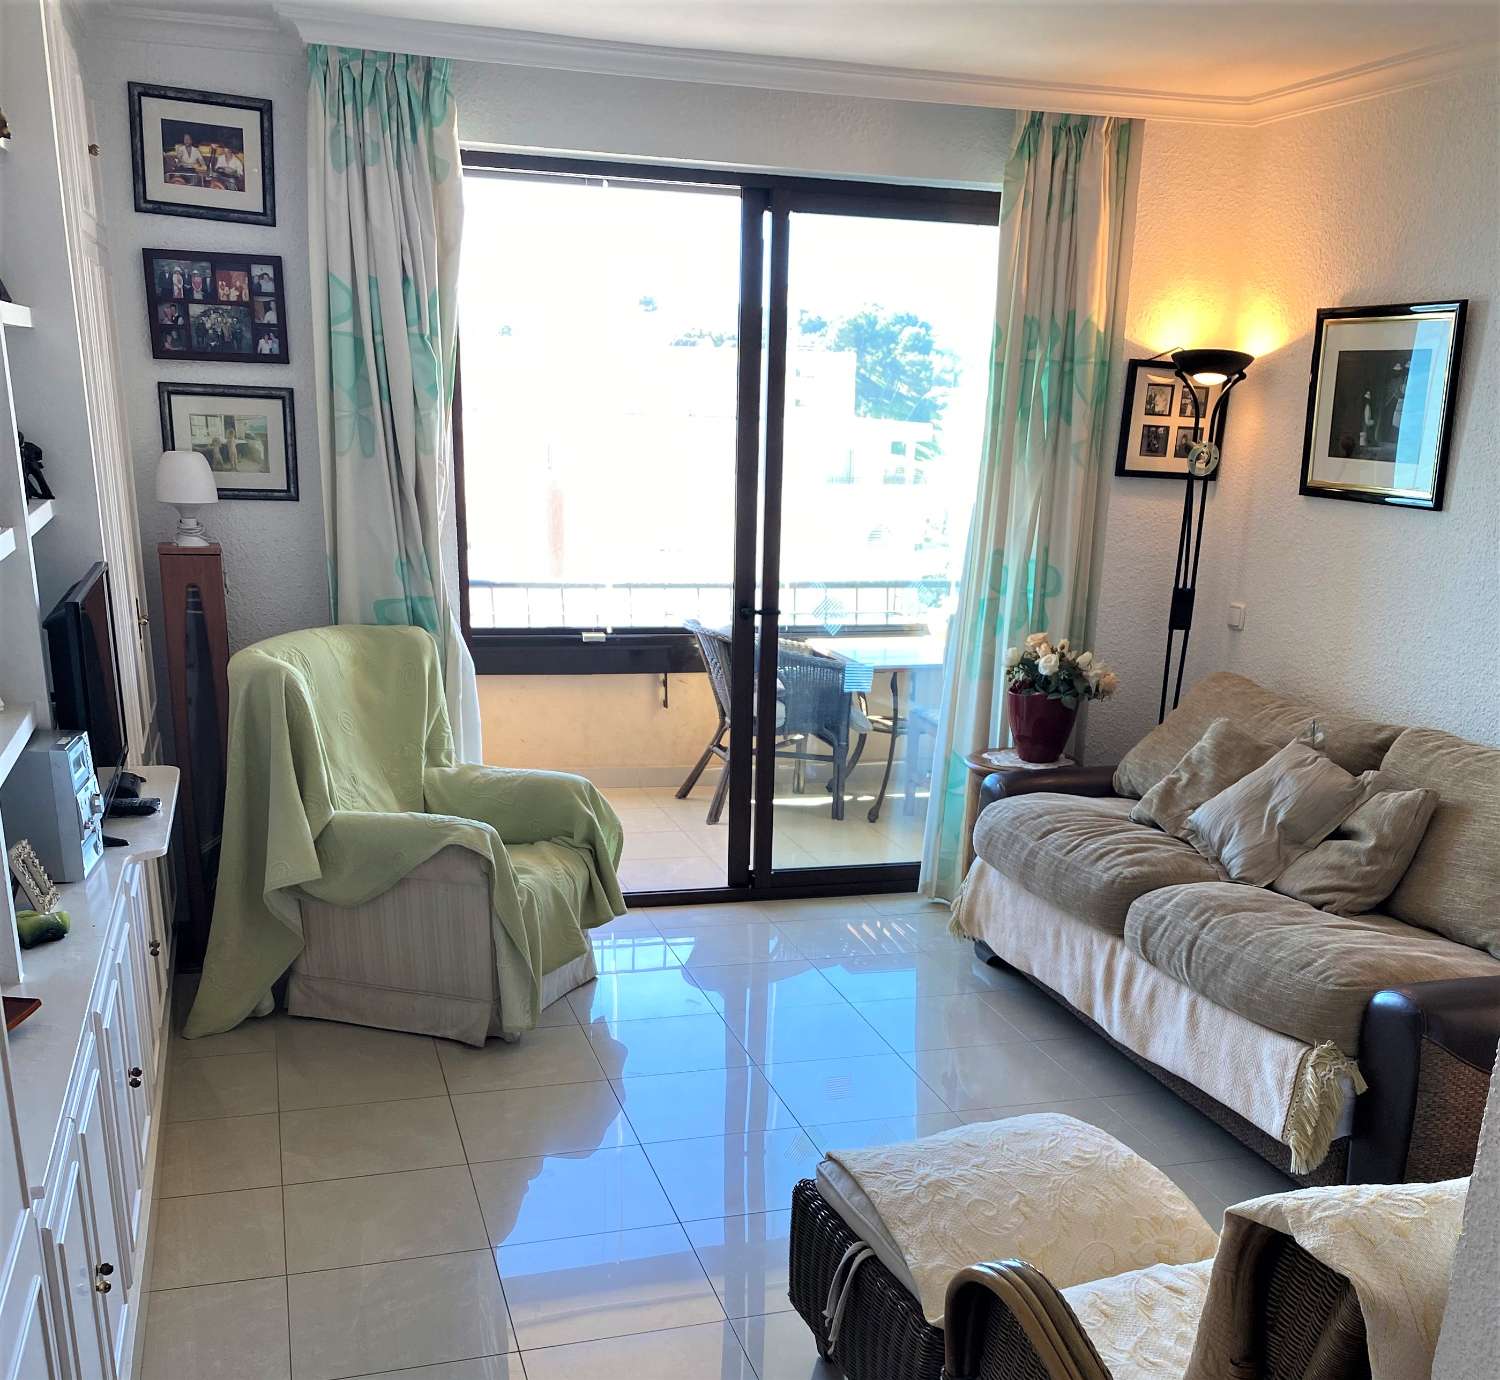 Fuengirola, 1 soveværelse, panoramaudsigt, Gratis Wi-Fi, swimmingpool, førstelinje strand.